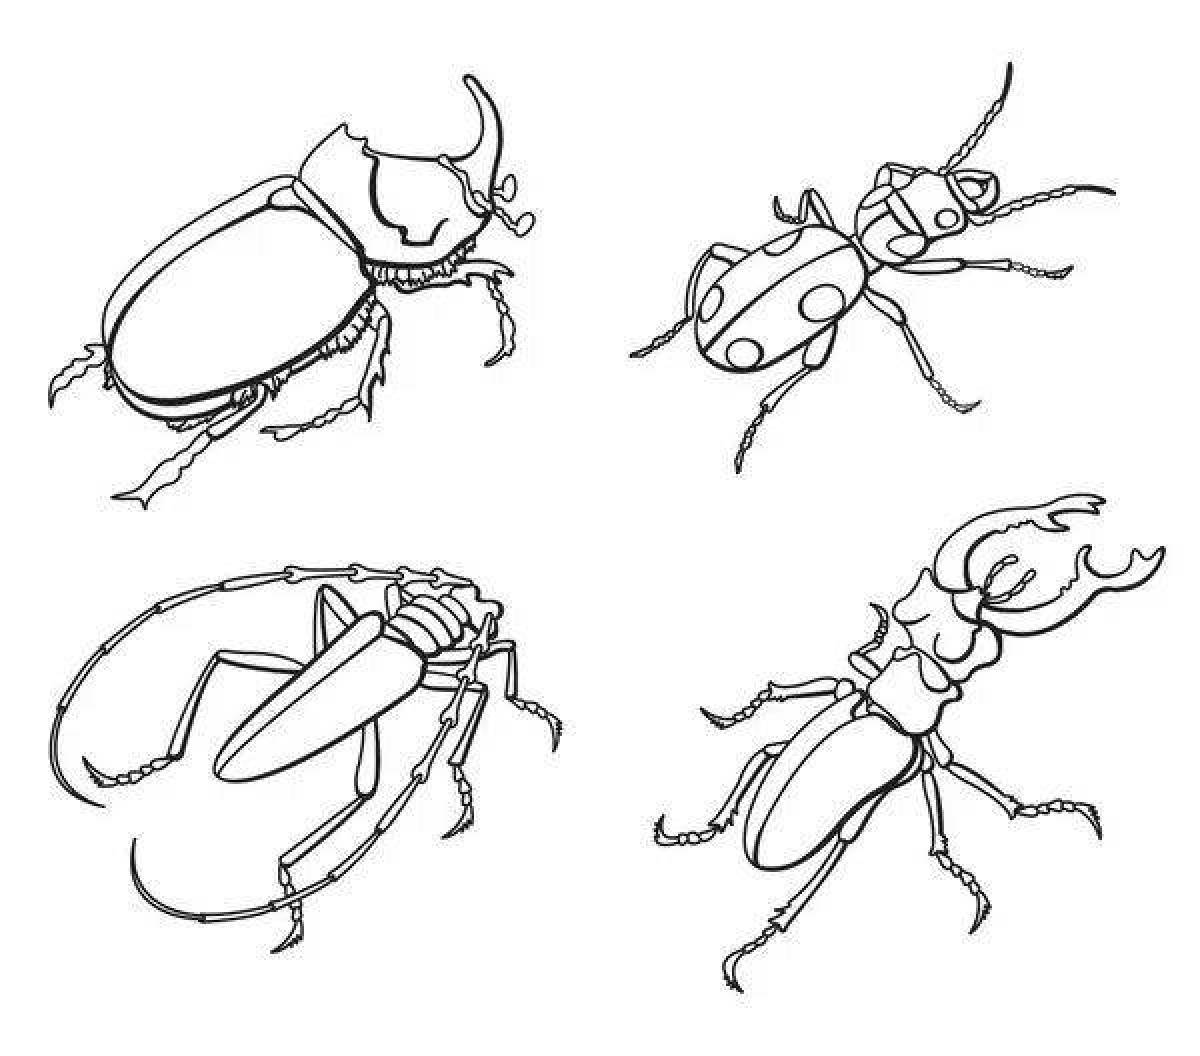 Stag beetle #8